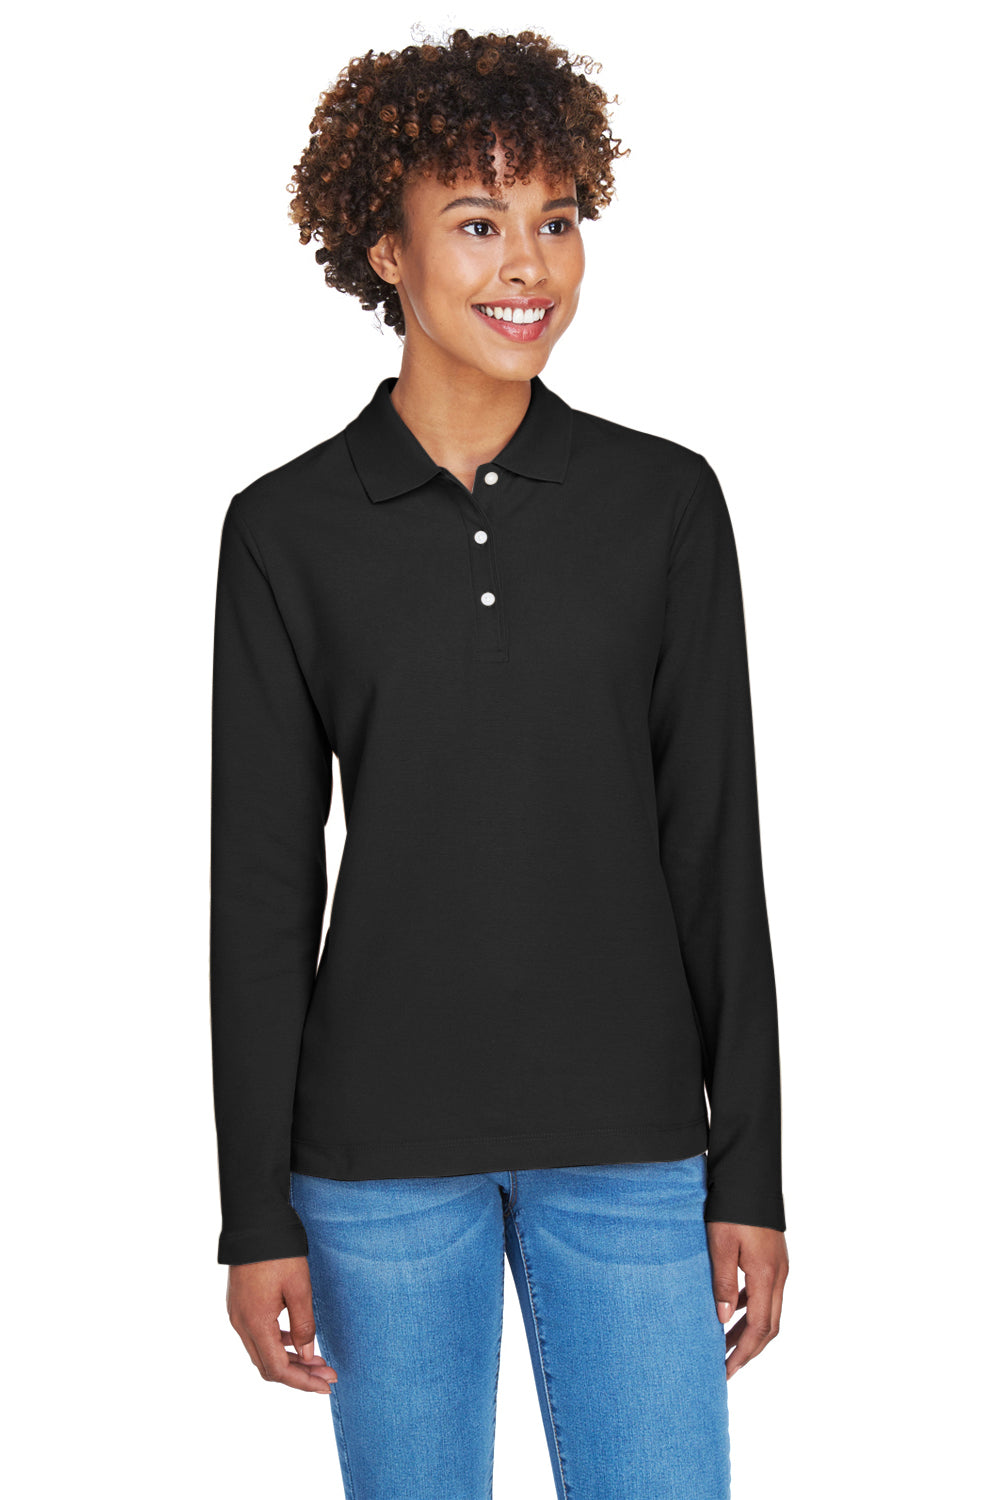 black long sleeve polo shirt womens